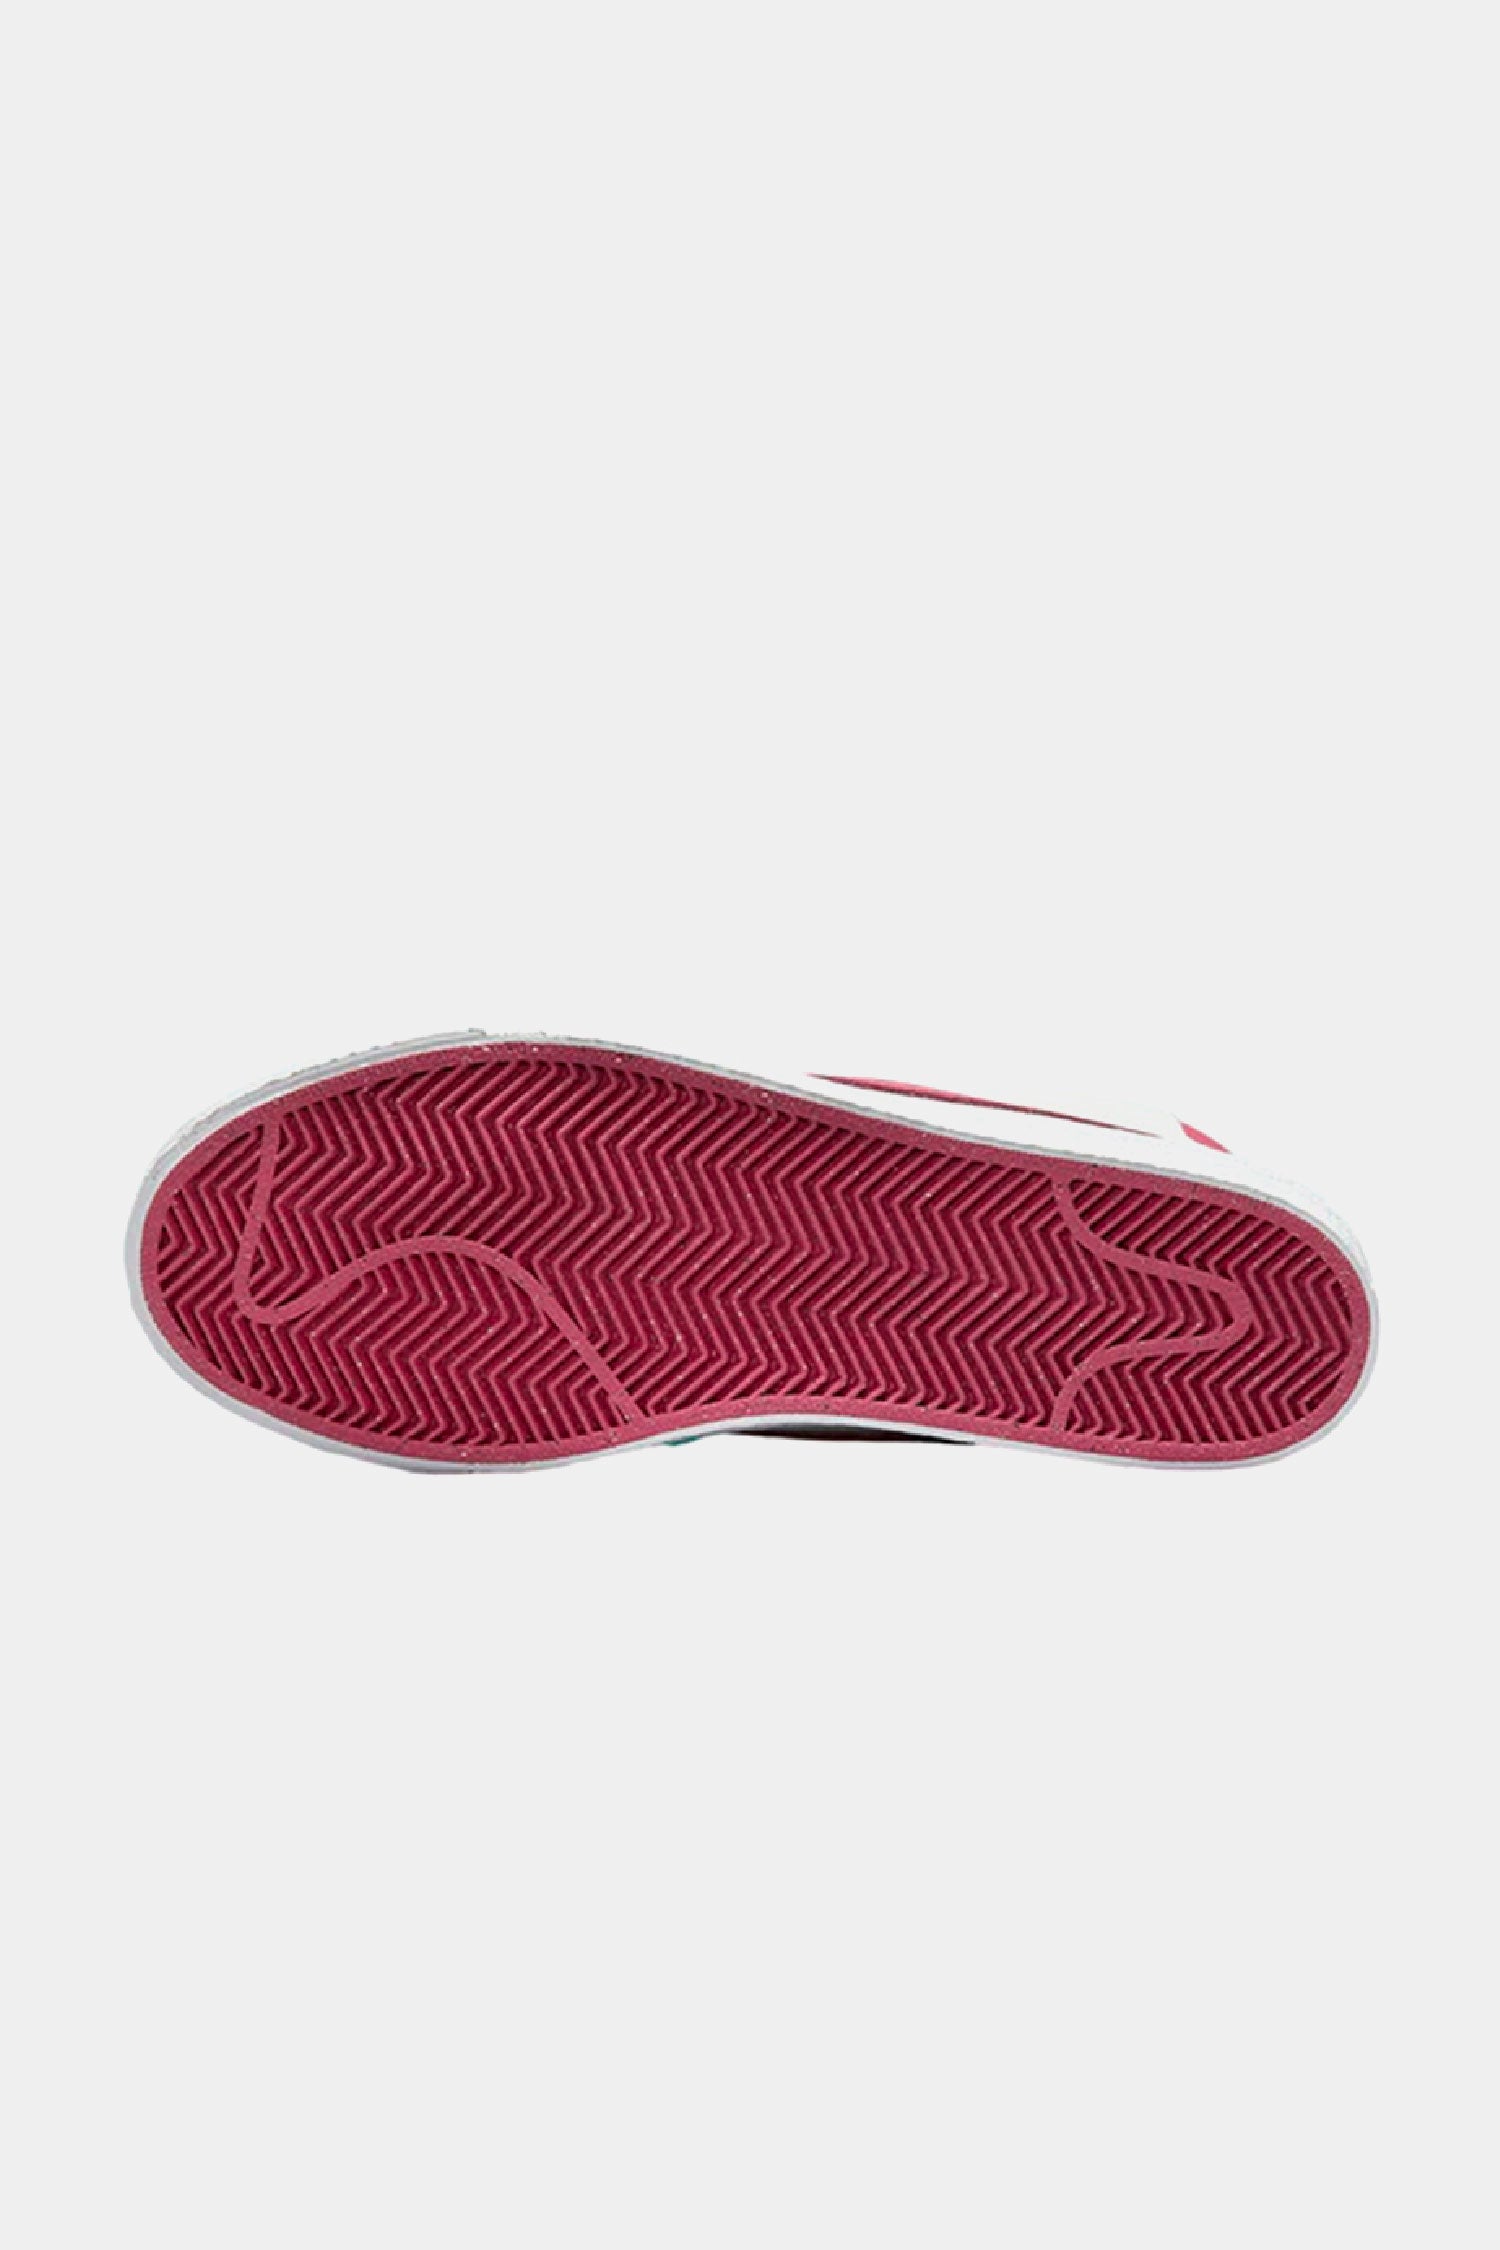 Selectshop FRAME - NIKE SB Nike SB Zoom Blazer Mid ISO "Sweet Beet" Footwear Concept Store Dubai